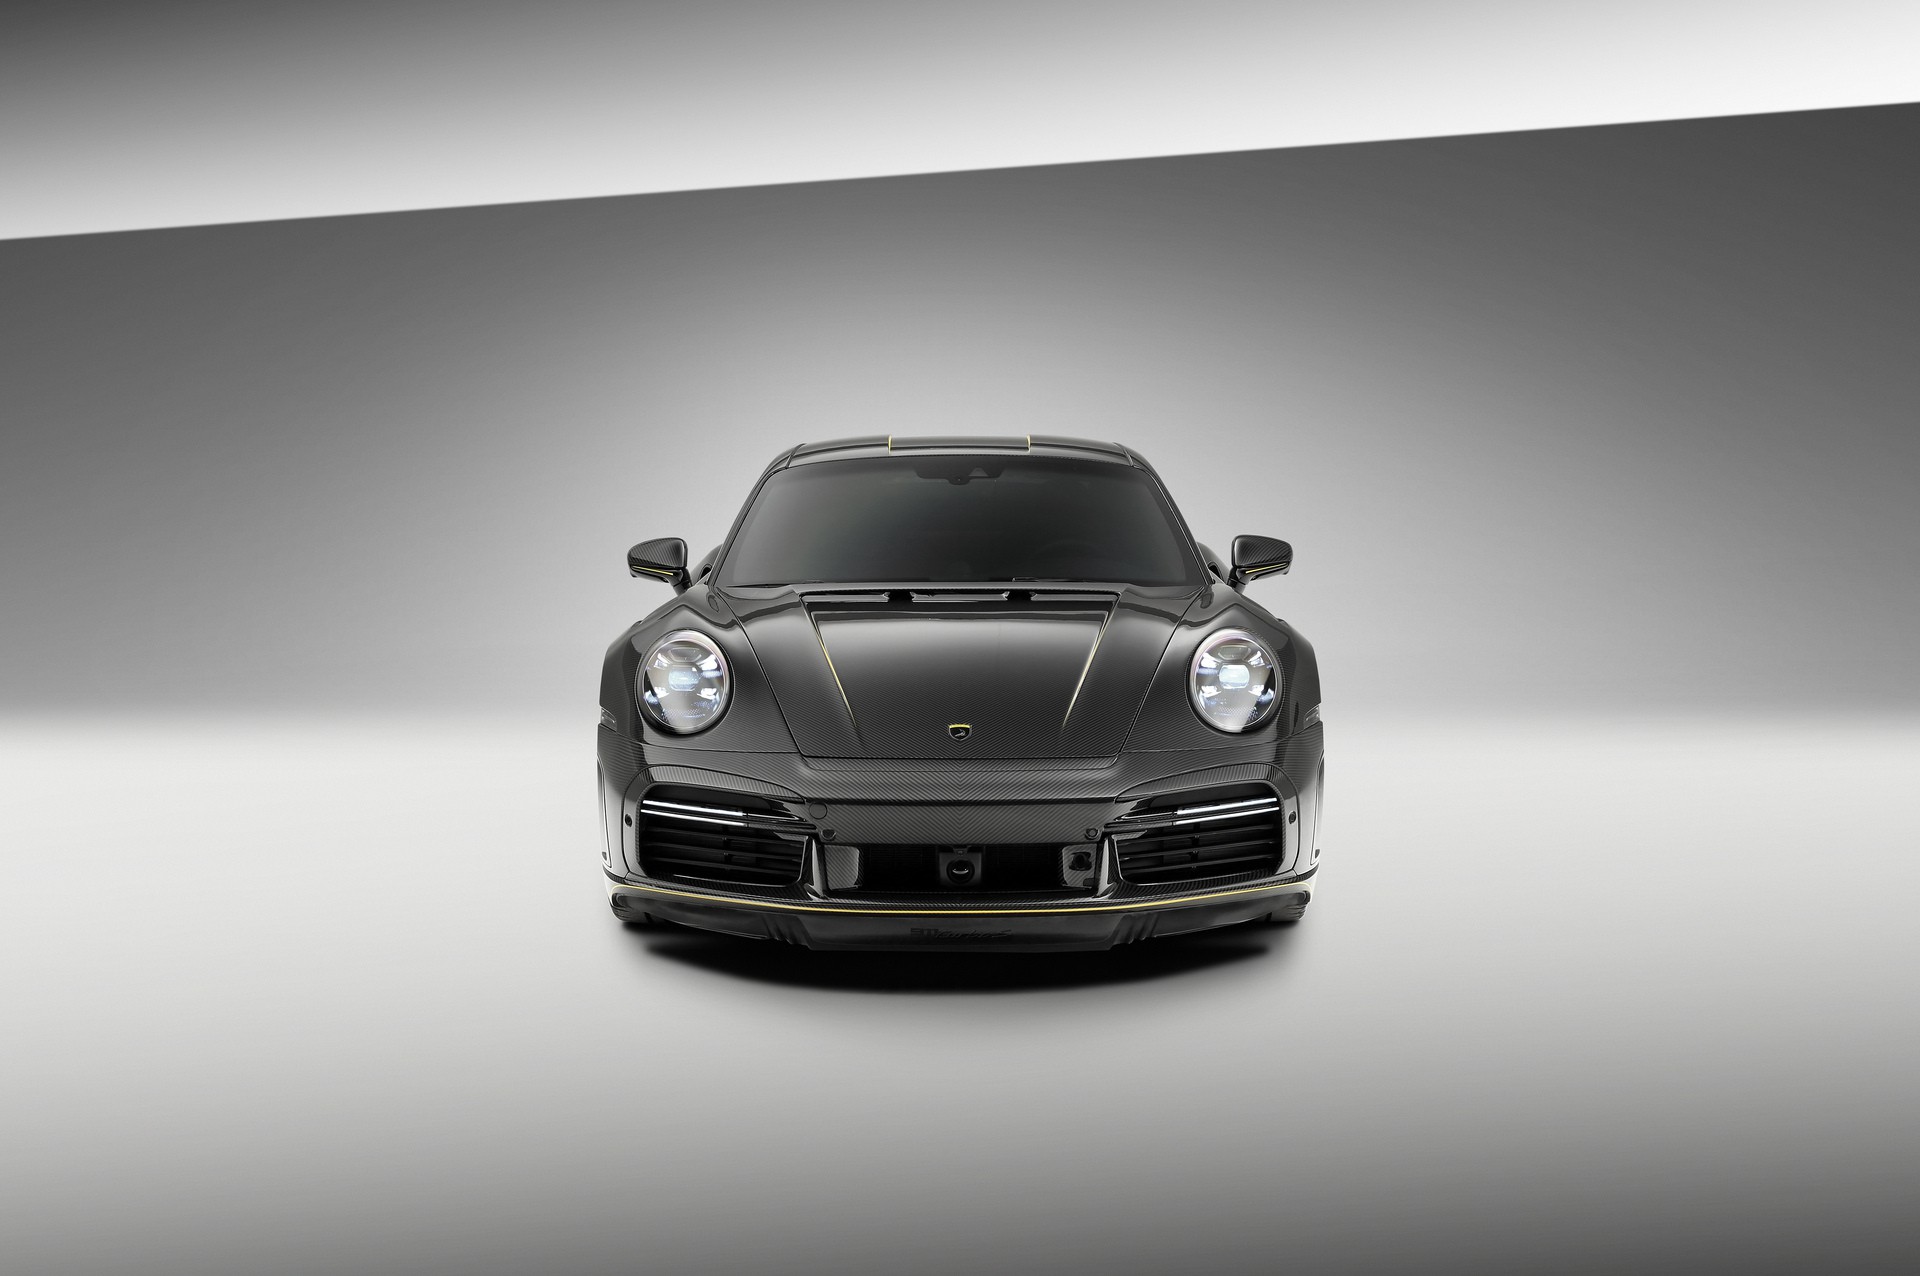 Porsche-992-Stinger-GTR-Carbon-Edition-by-TopCar-Design-5.jpeg